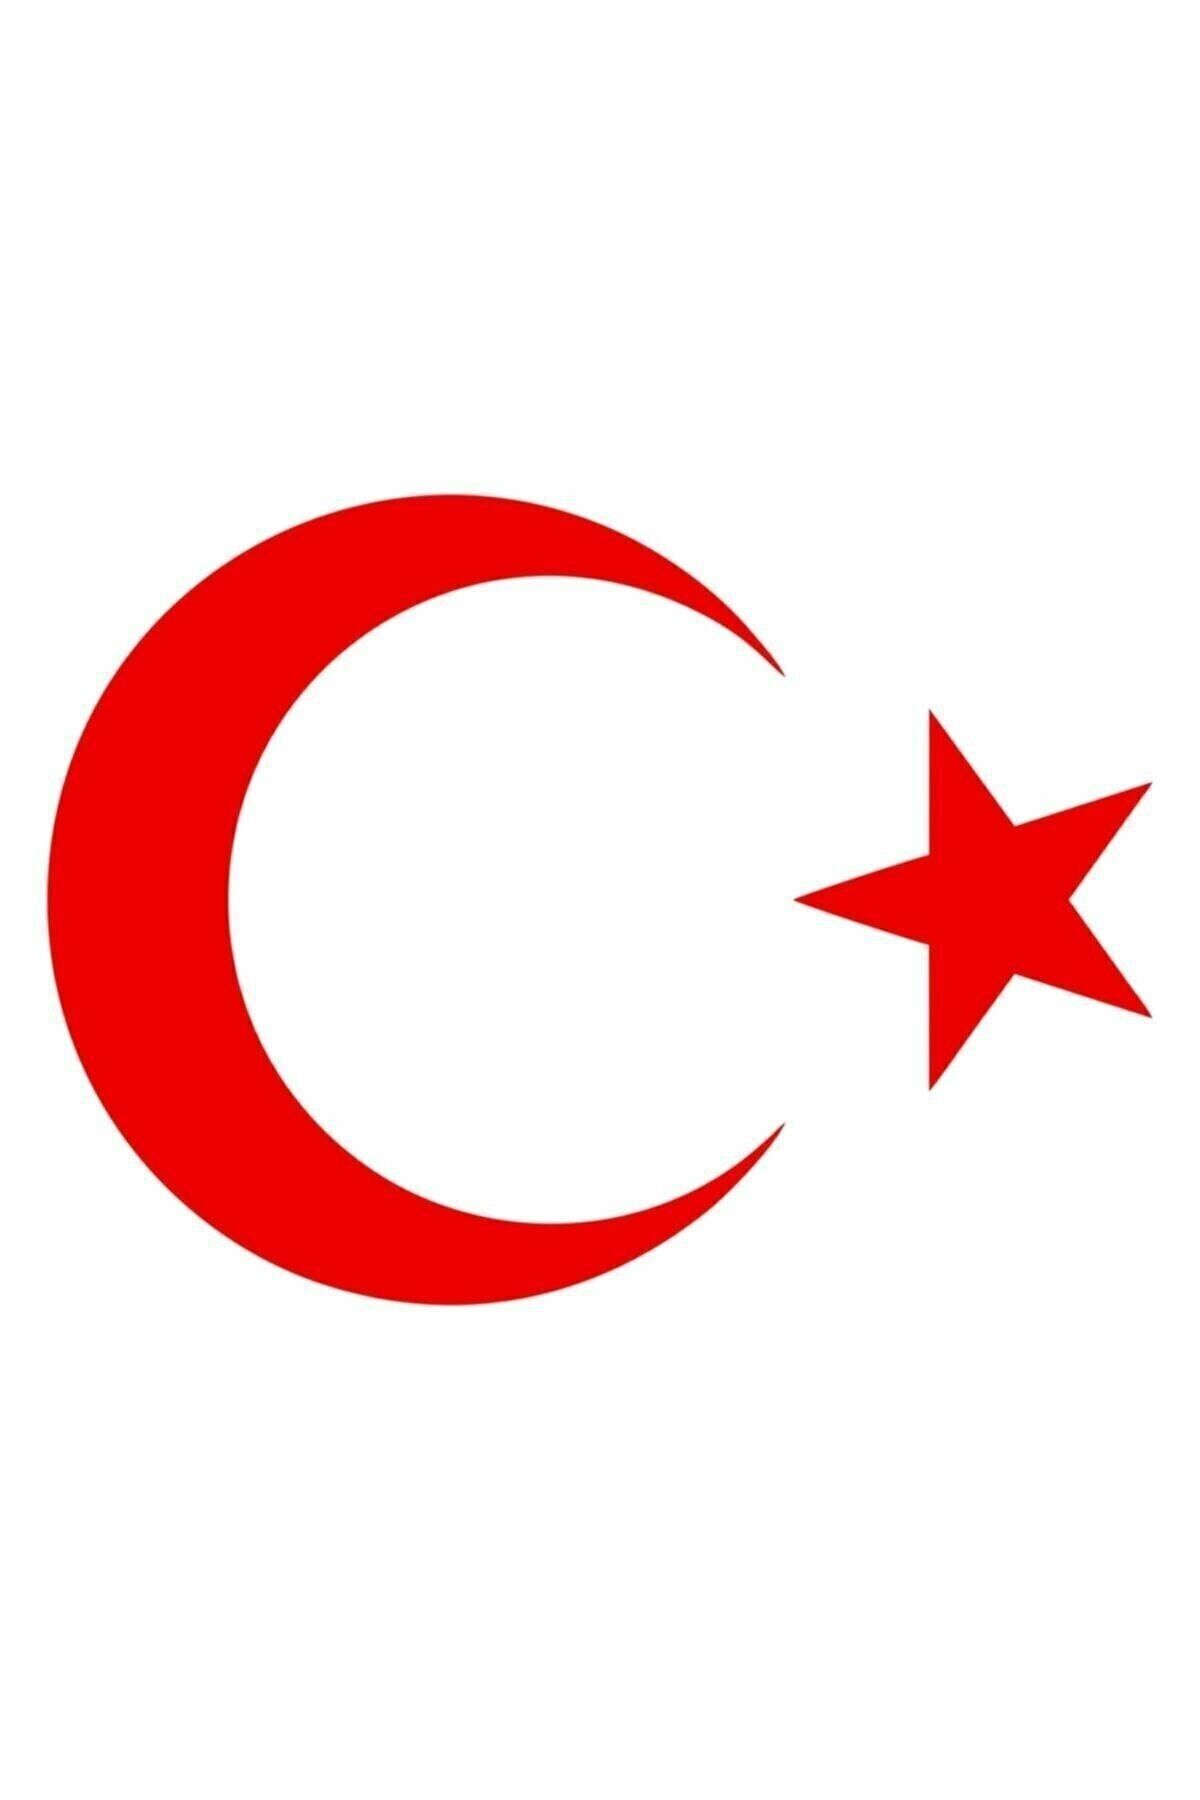 Quart Aksesuar Ay Yıldız Sticker Türk Bayrağı Sticker 10 X 7,5 Cm Kırmızı